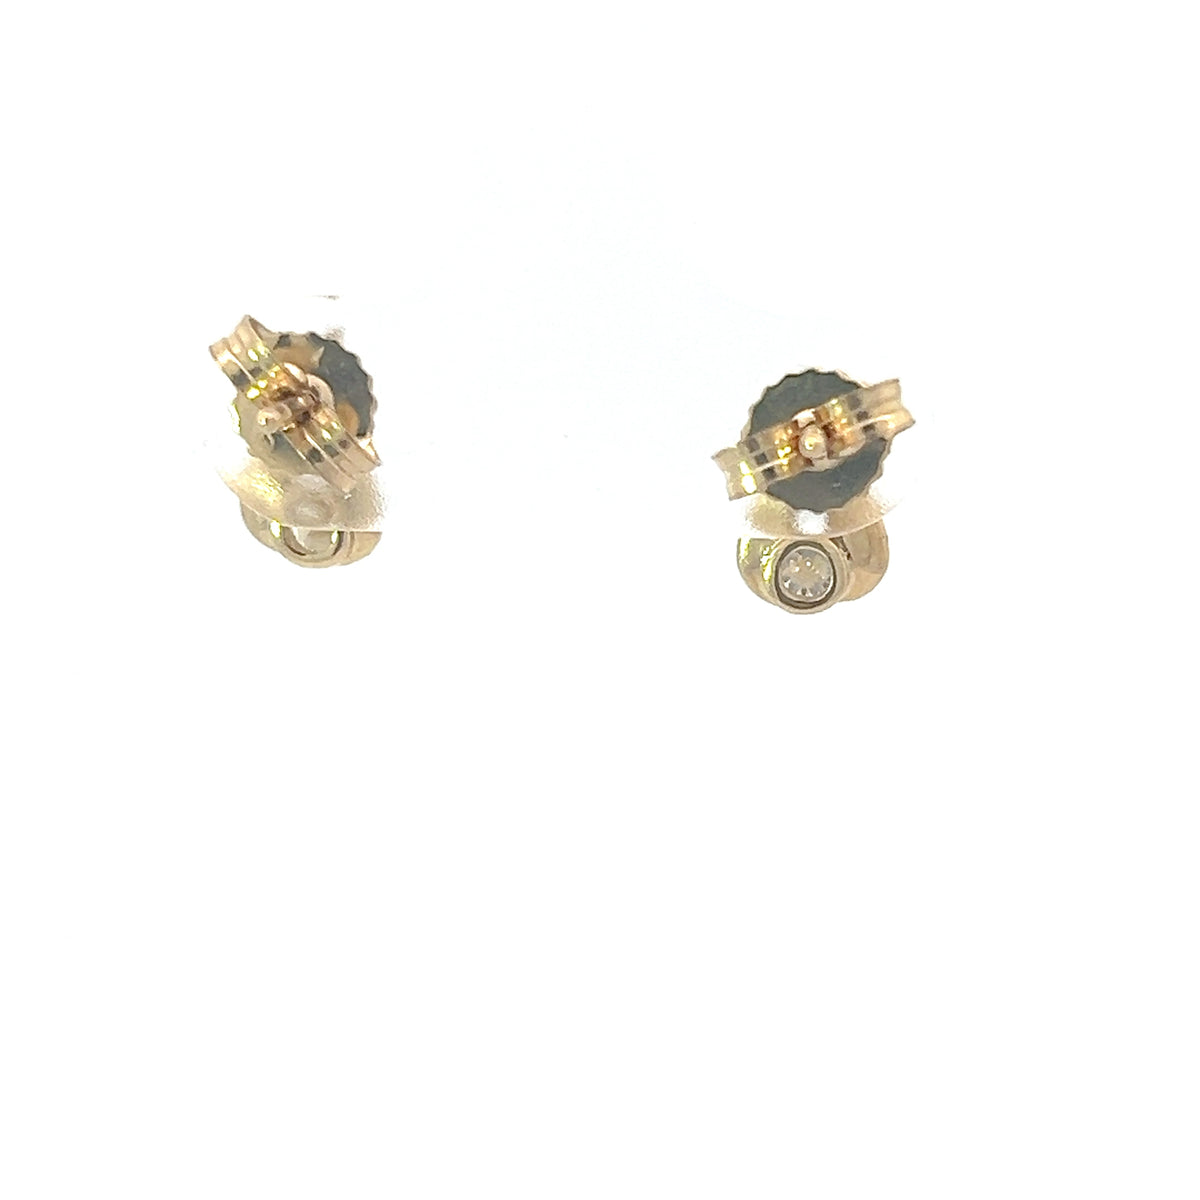 14K Yellow Gold 0.25cttw Canadian Diamond Earrings